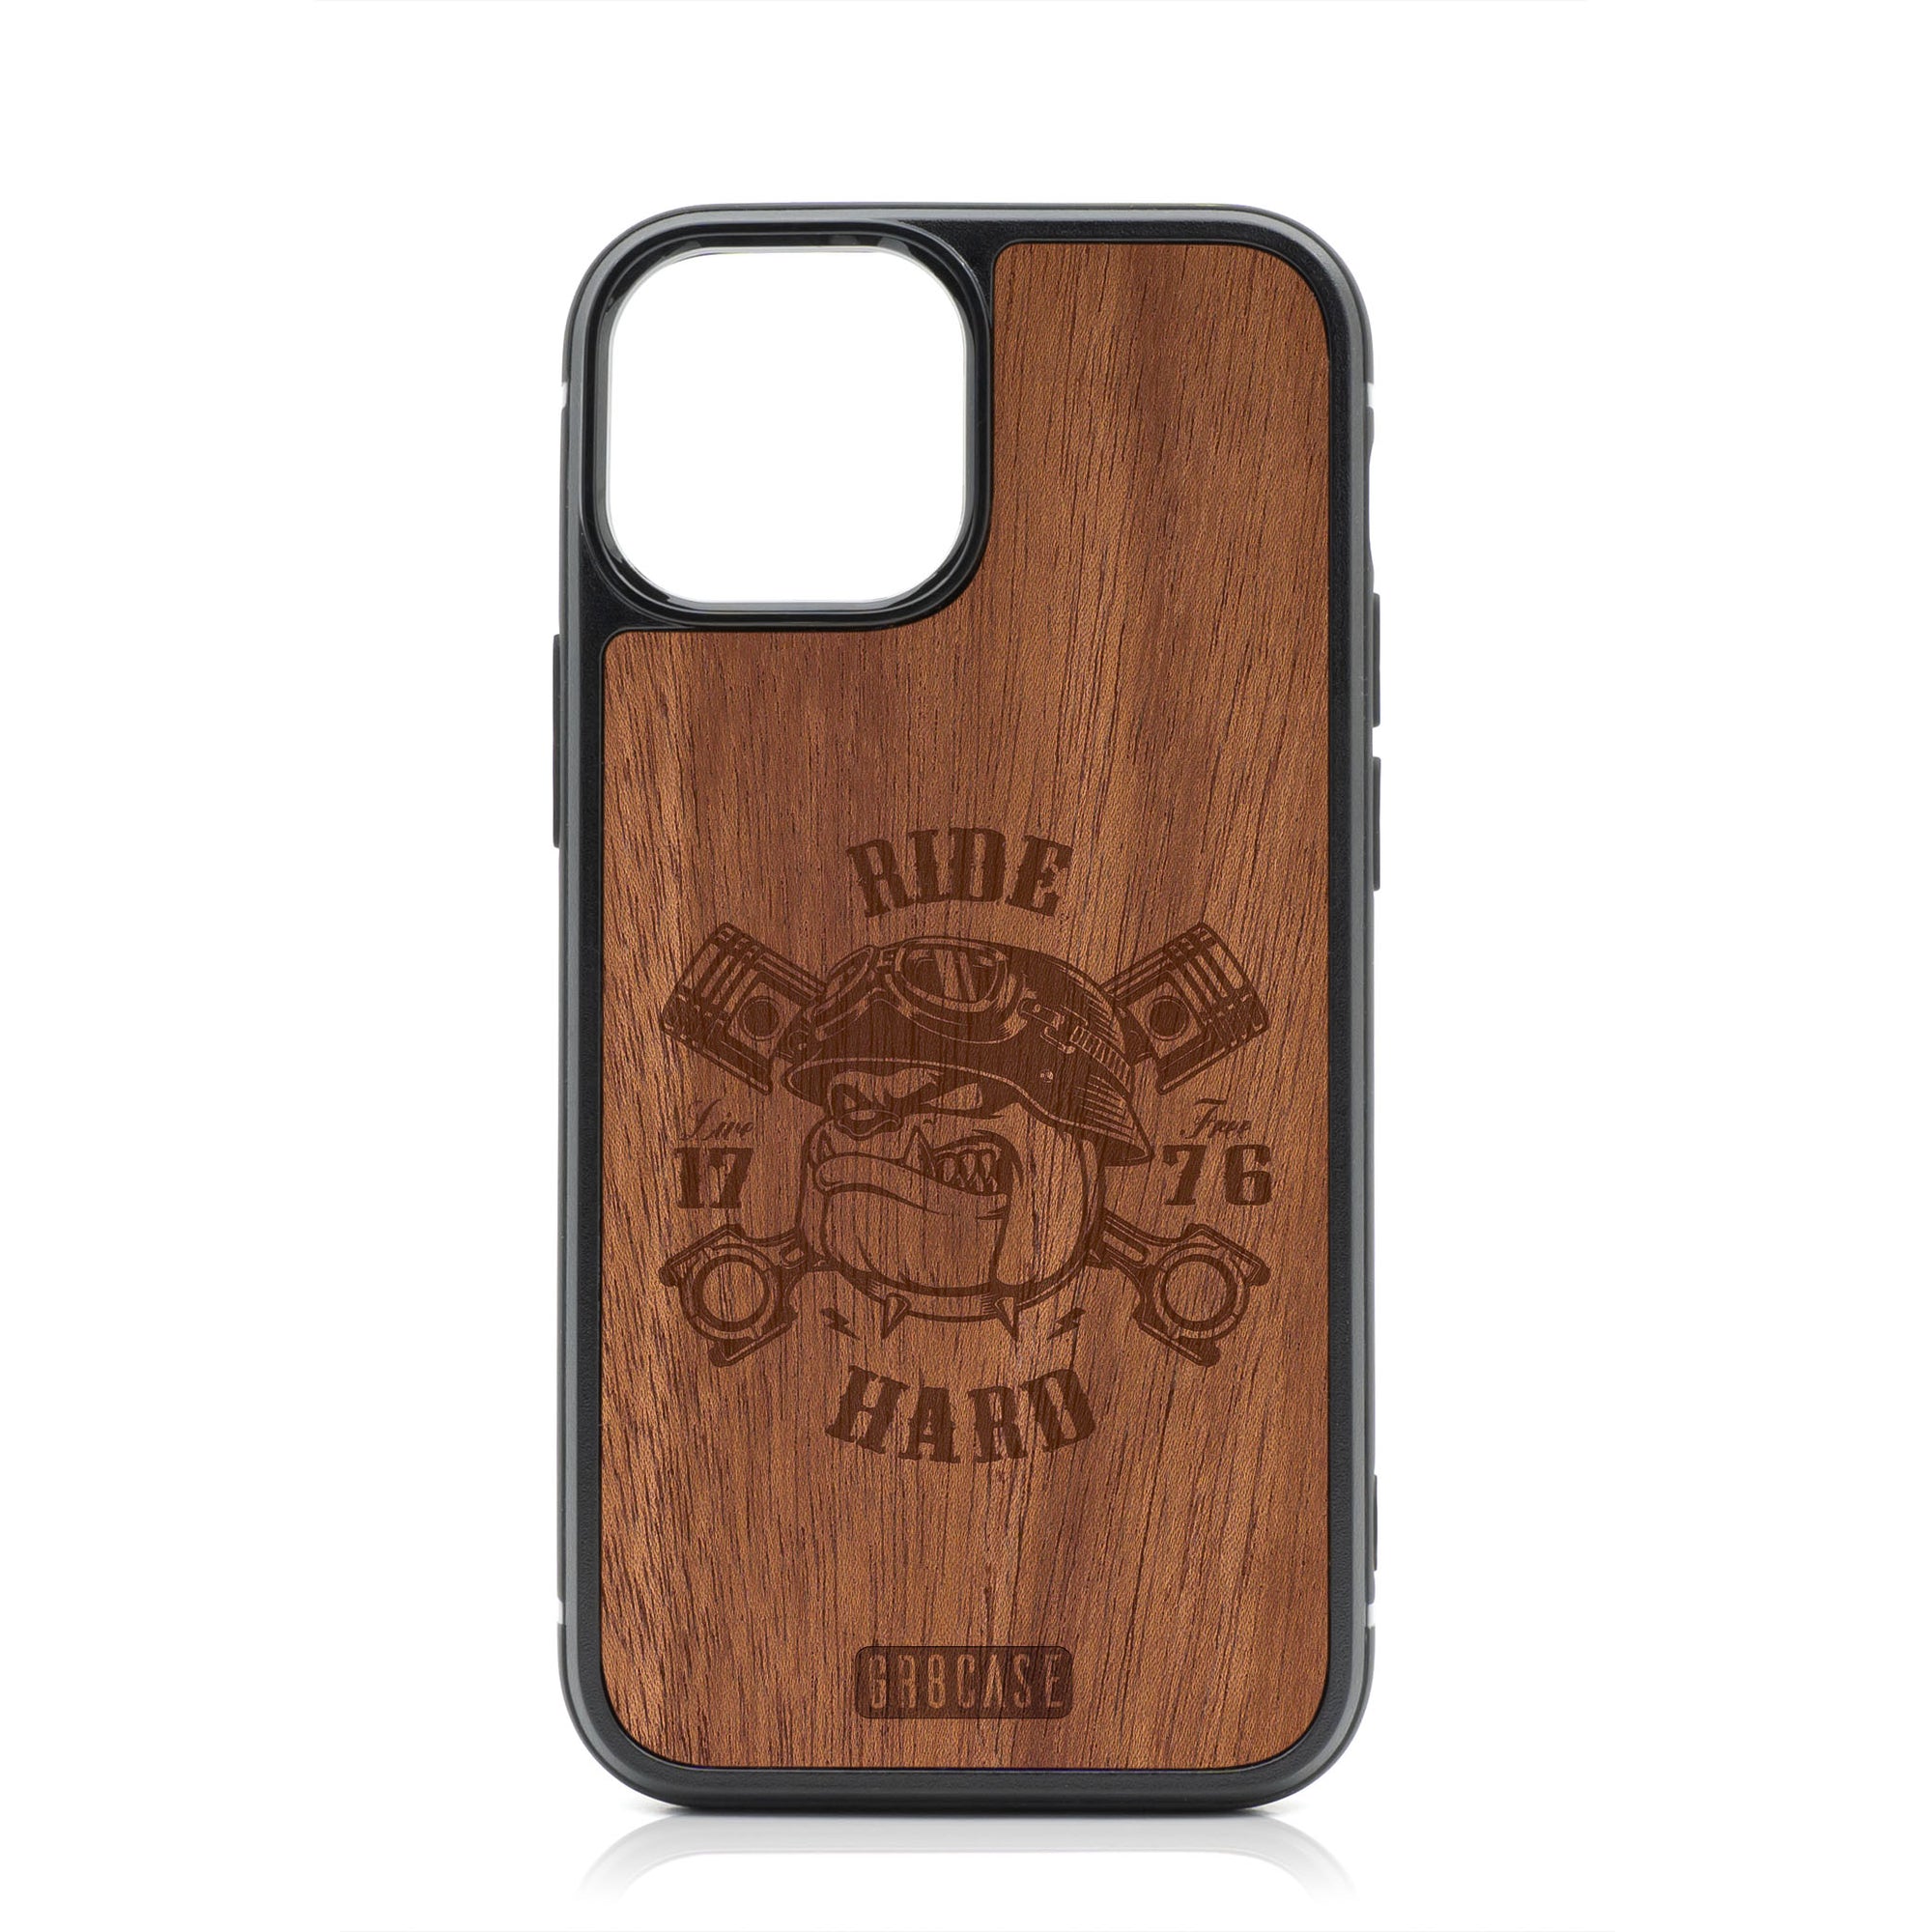 Ride Hard Live Free (Biker Dog) Design Wood Case For iPhone 13 Mini